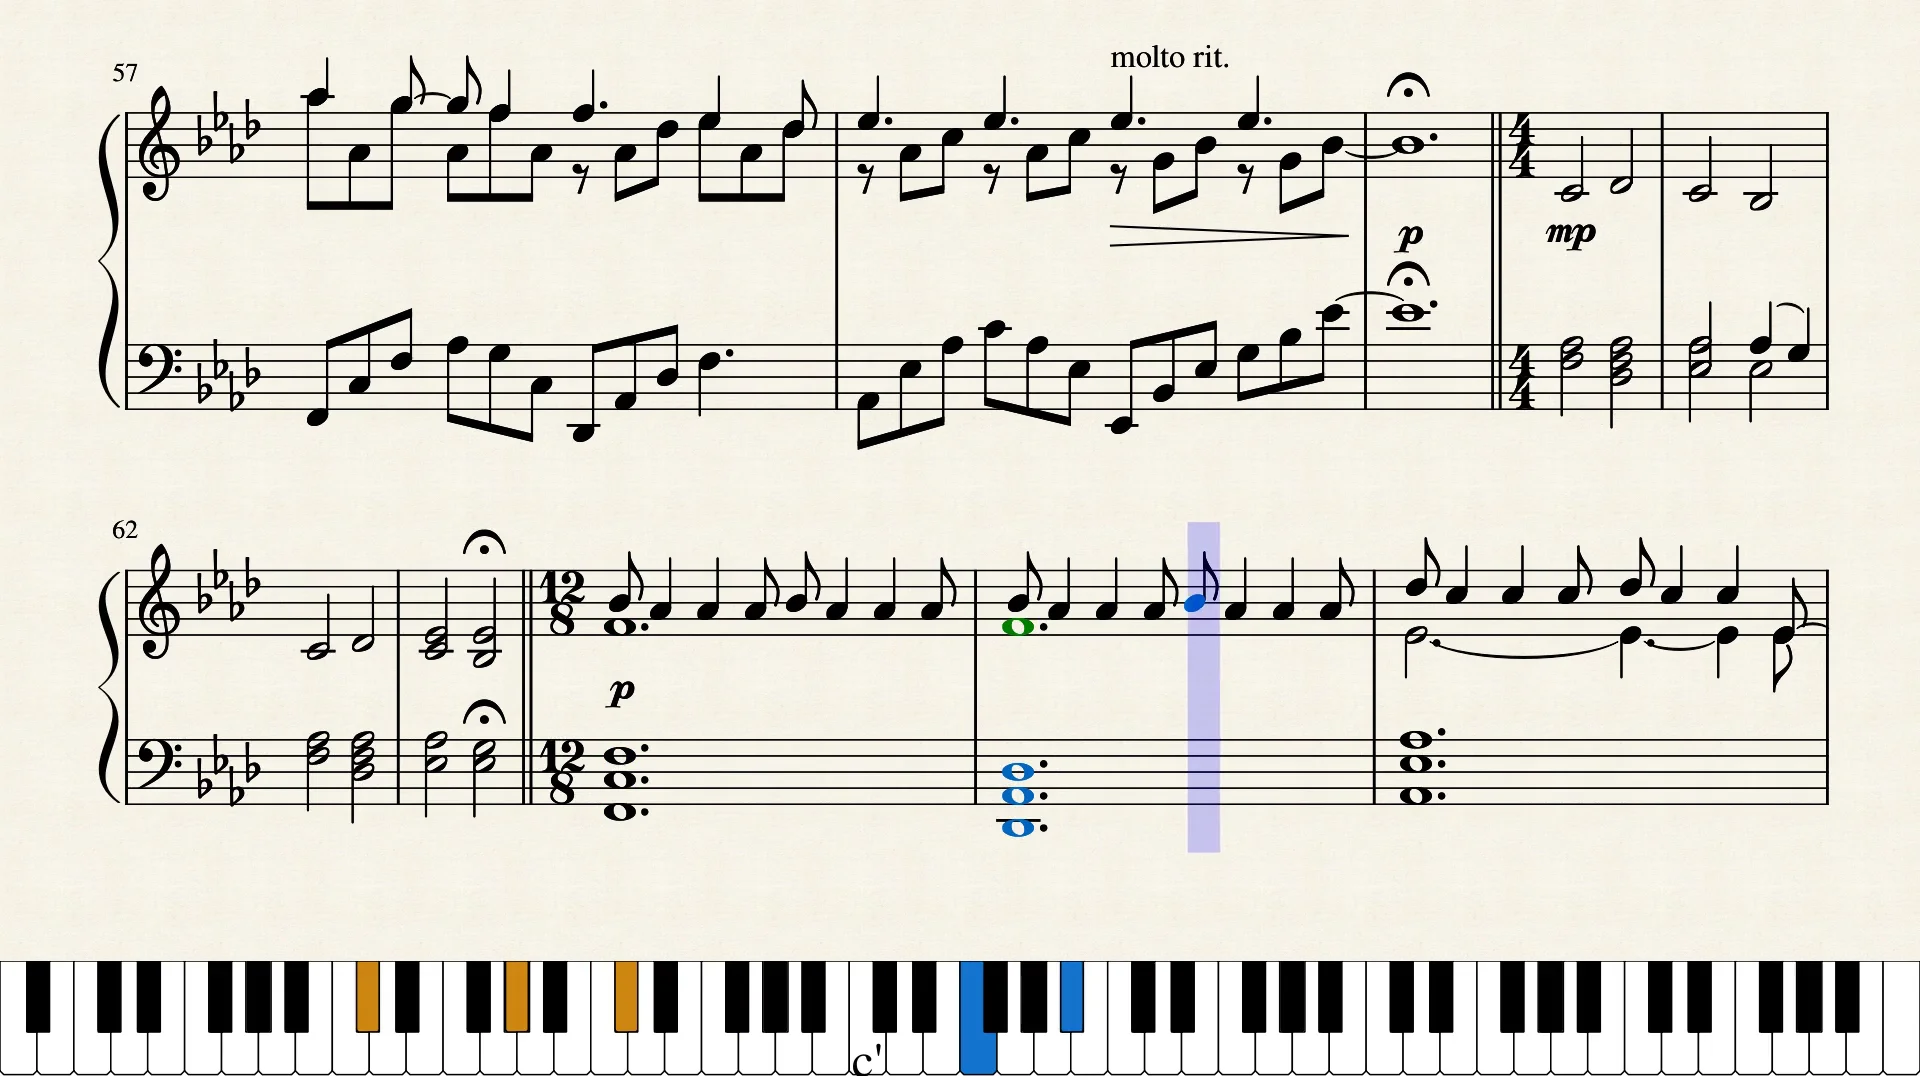 Nuvole Bianche Sheet Music | Ludovico Einaudi | Easy Piano